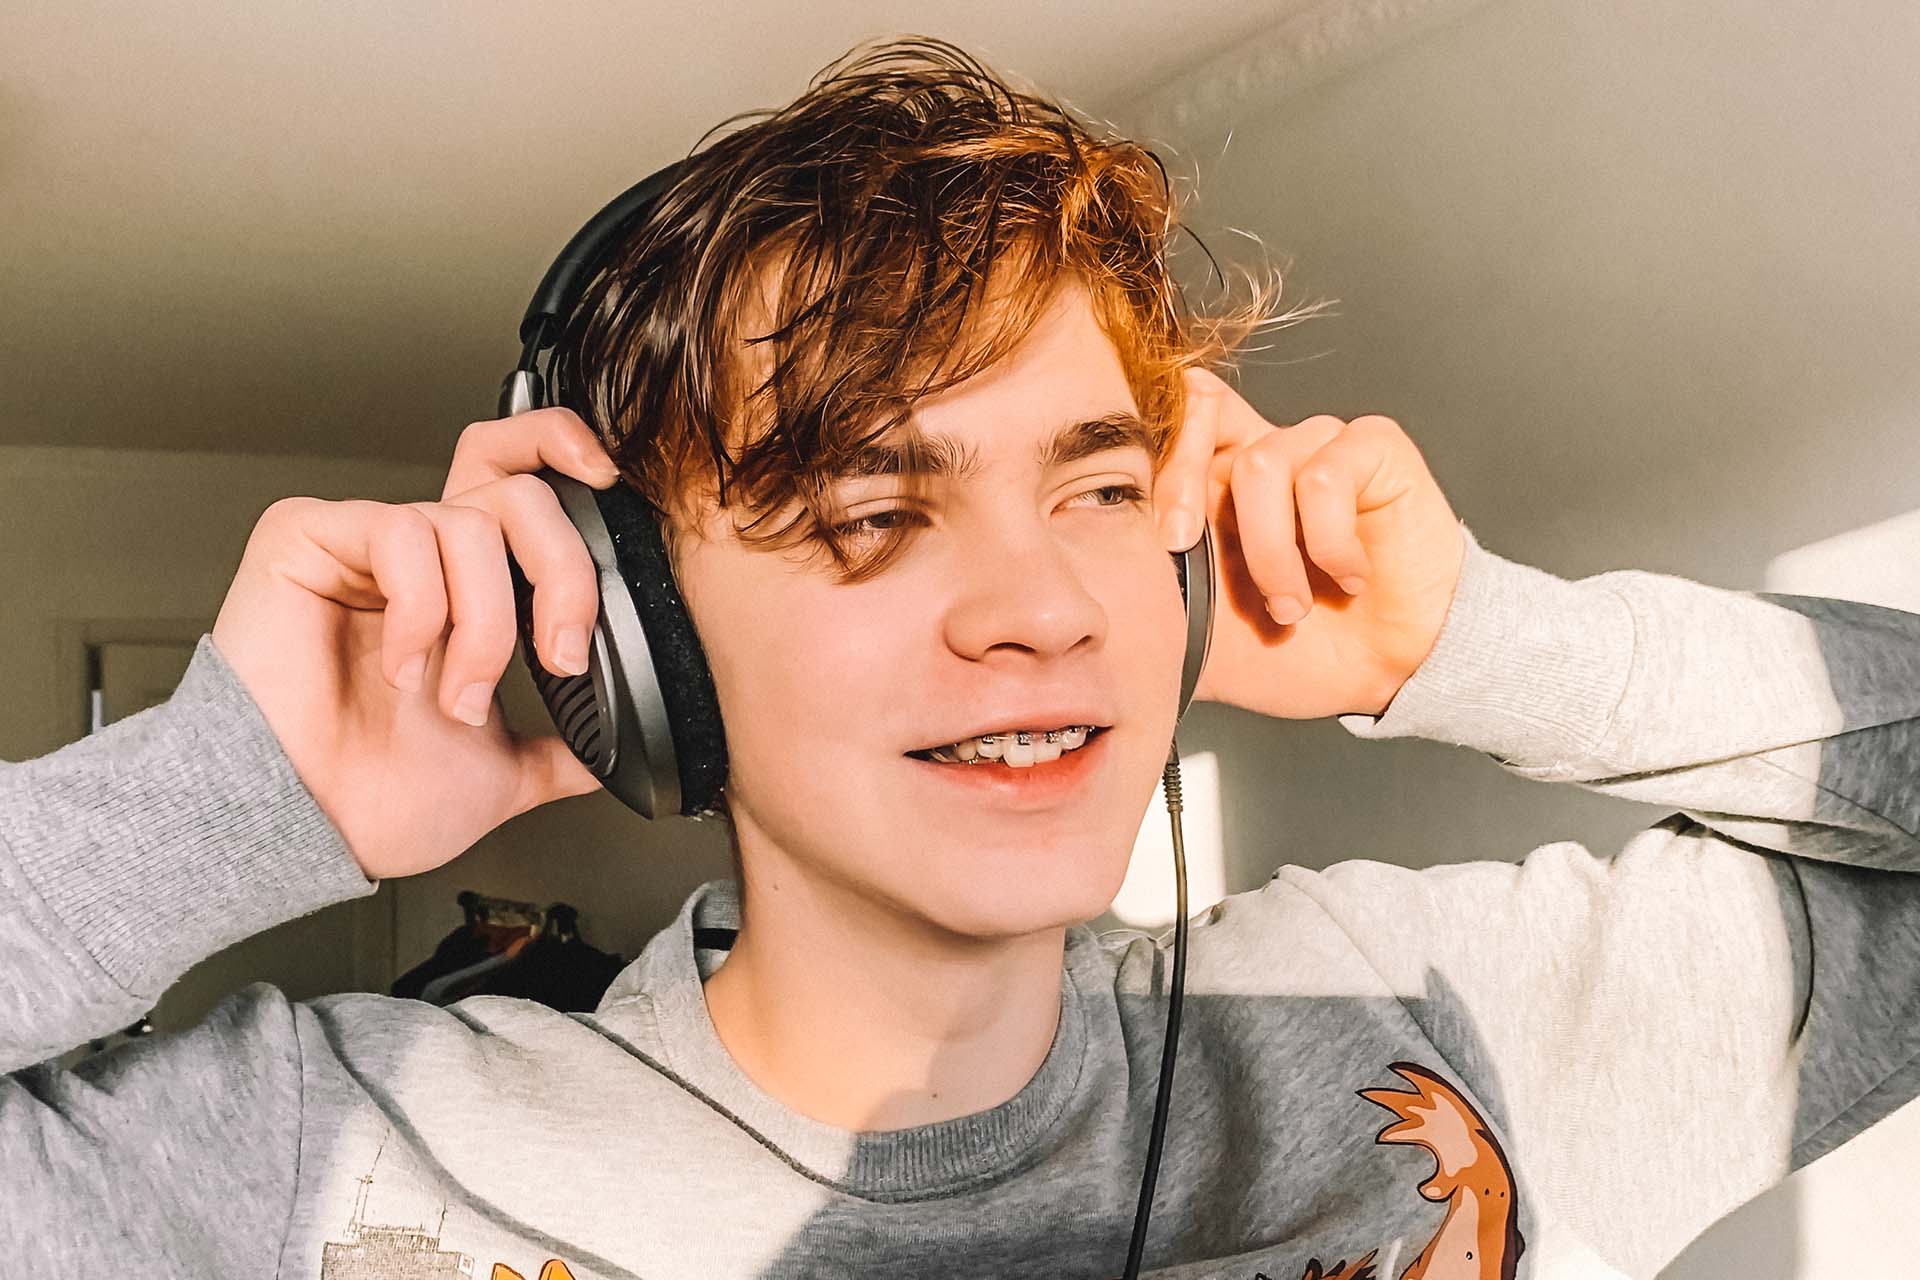 Teen boy with braces listens to music on headphones in San Fernando Valley, CA